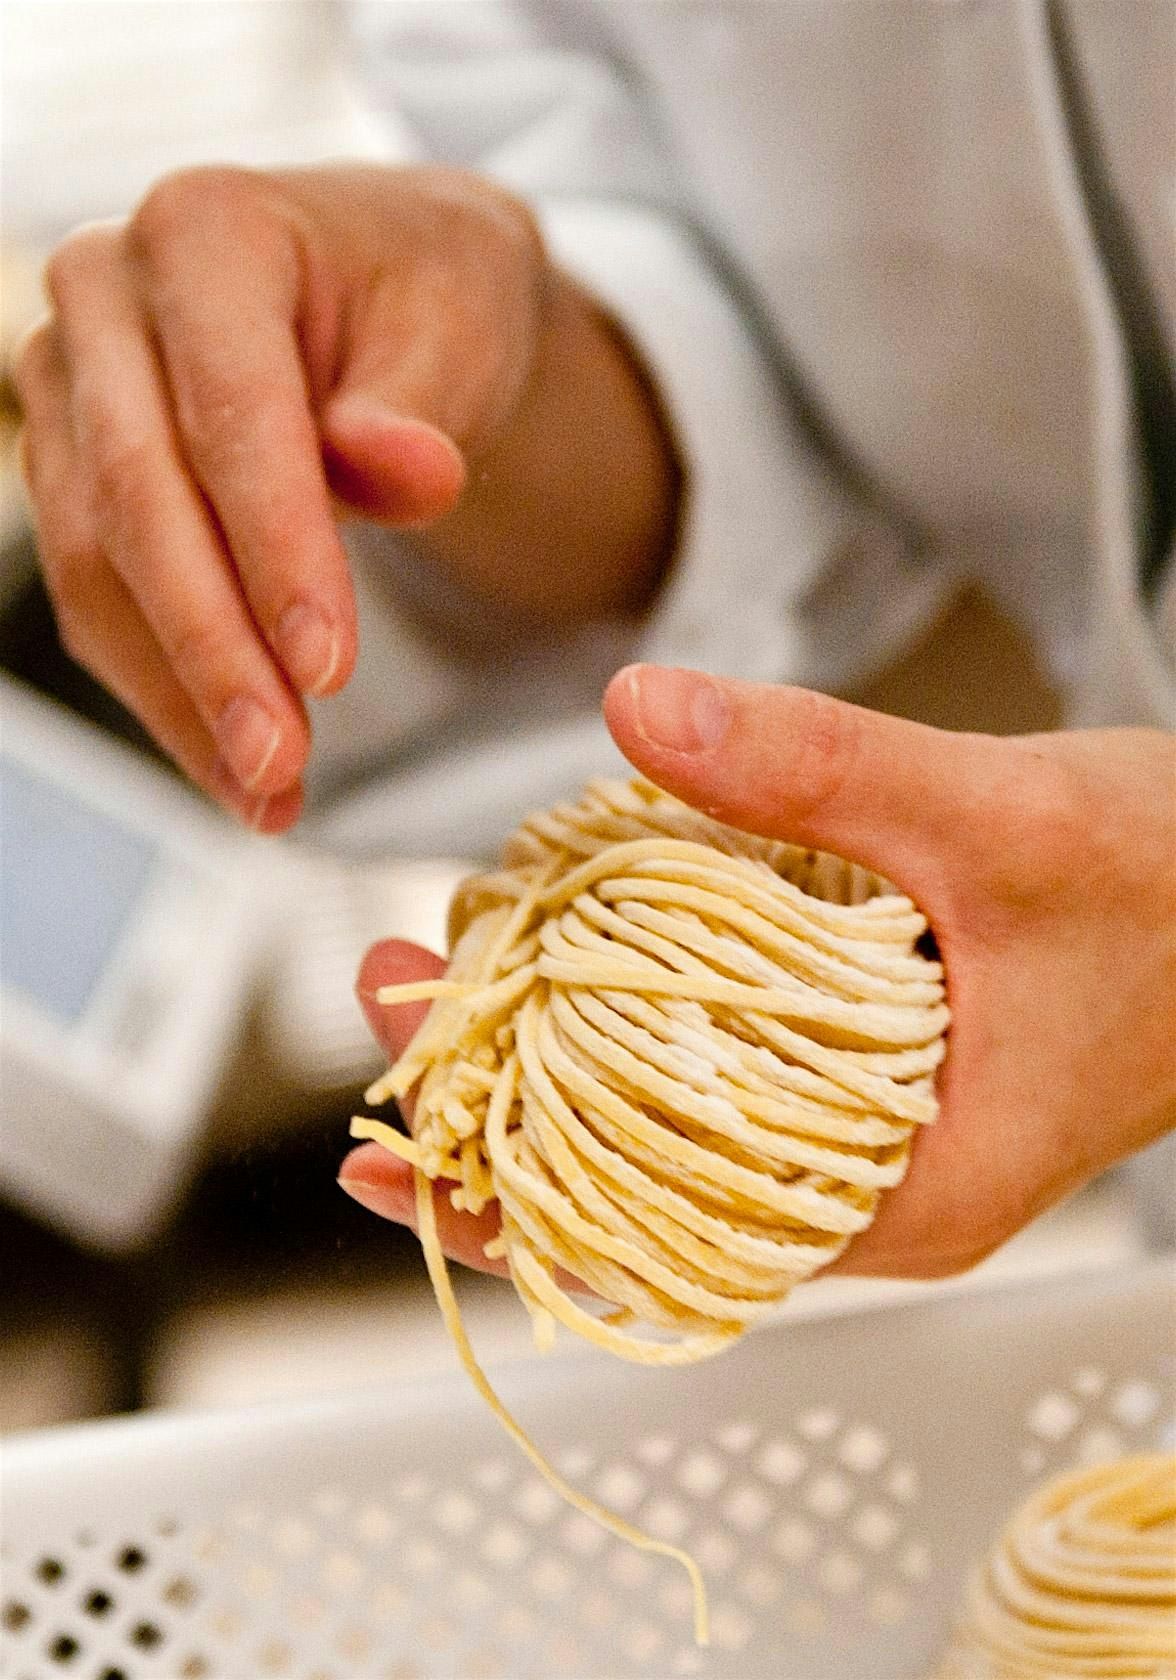 Hands-On Fresh Pasta-Making 101 Workshop at 6:00pm